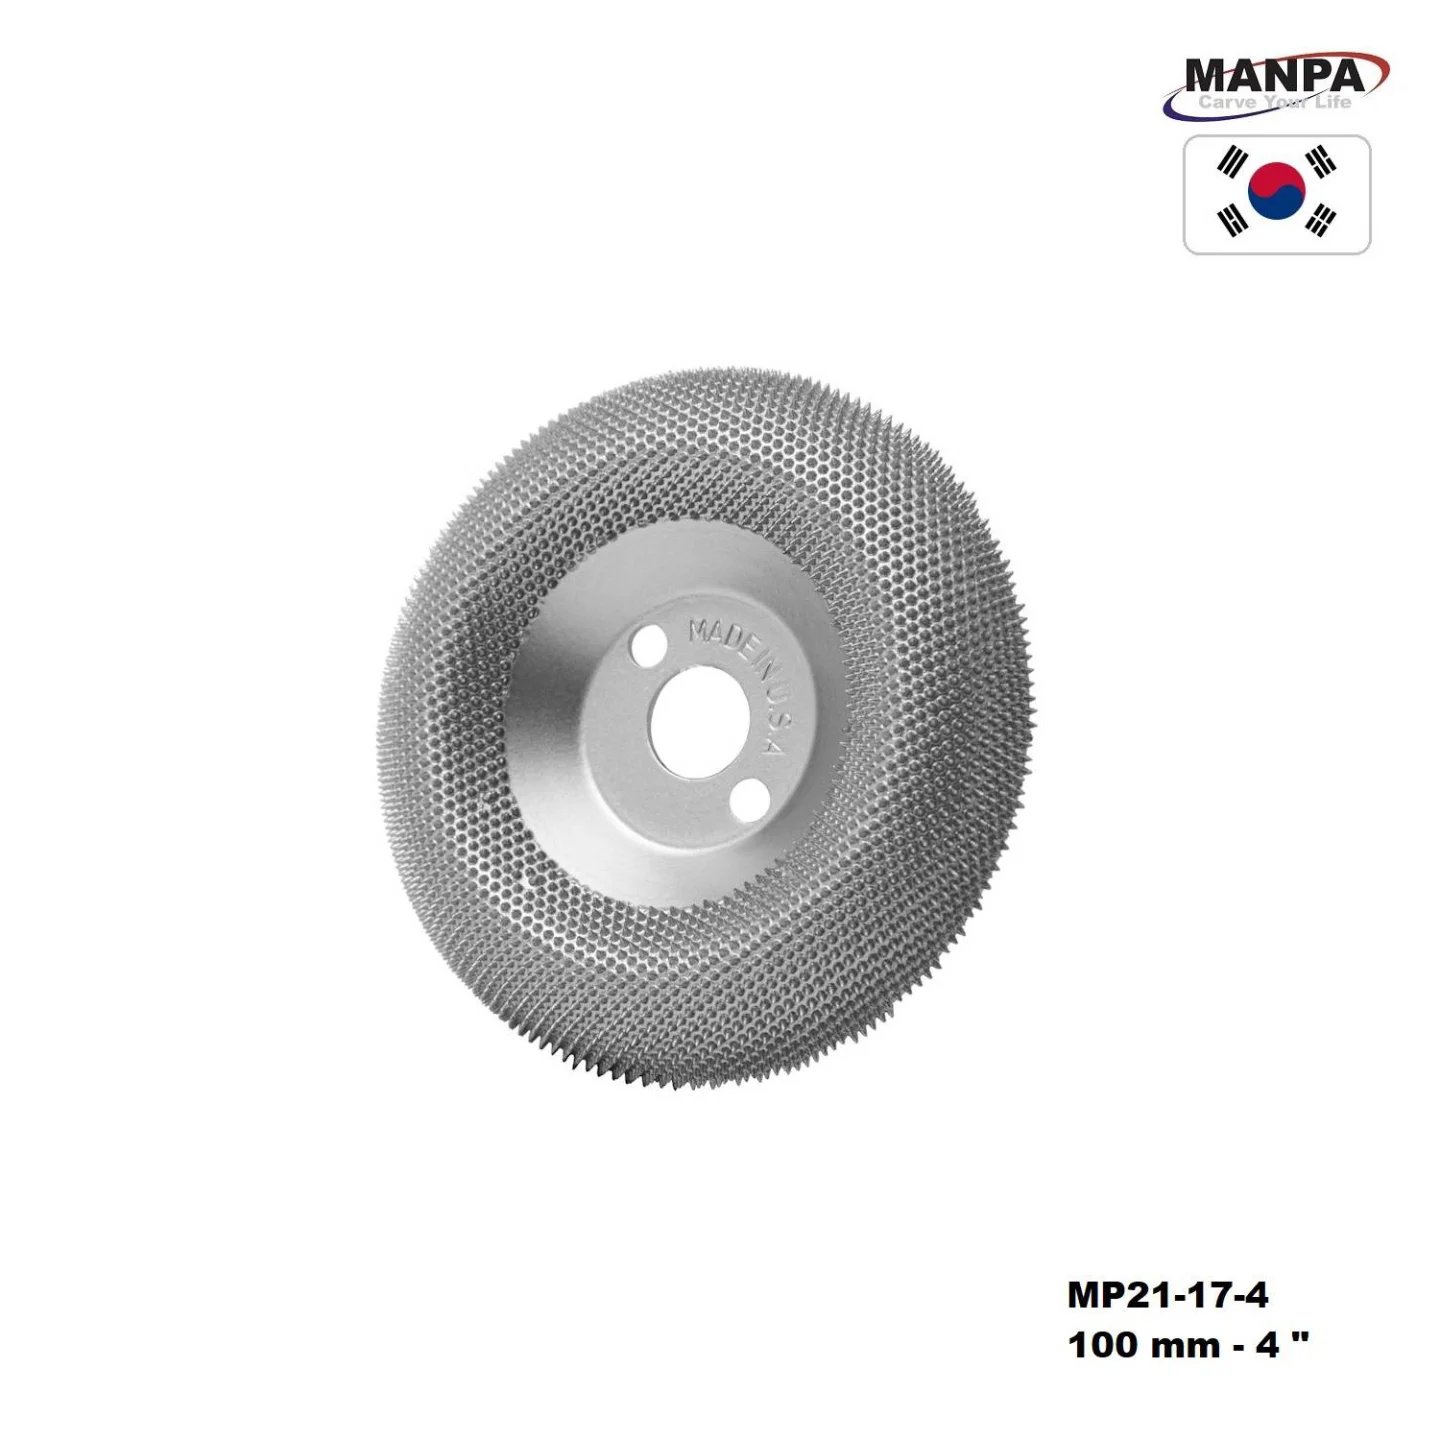 Manpa-Tools-MP21-17-4-raspschijf.